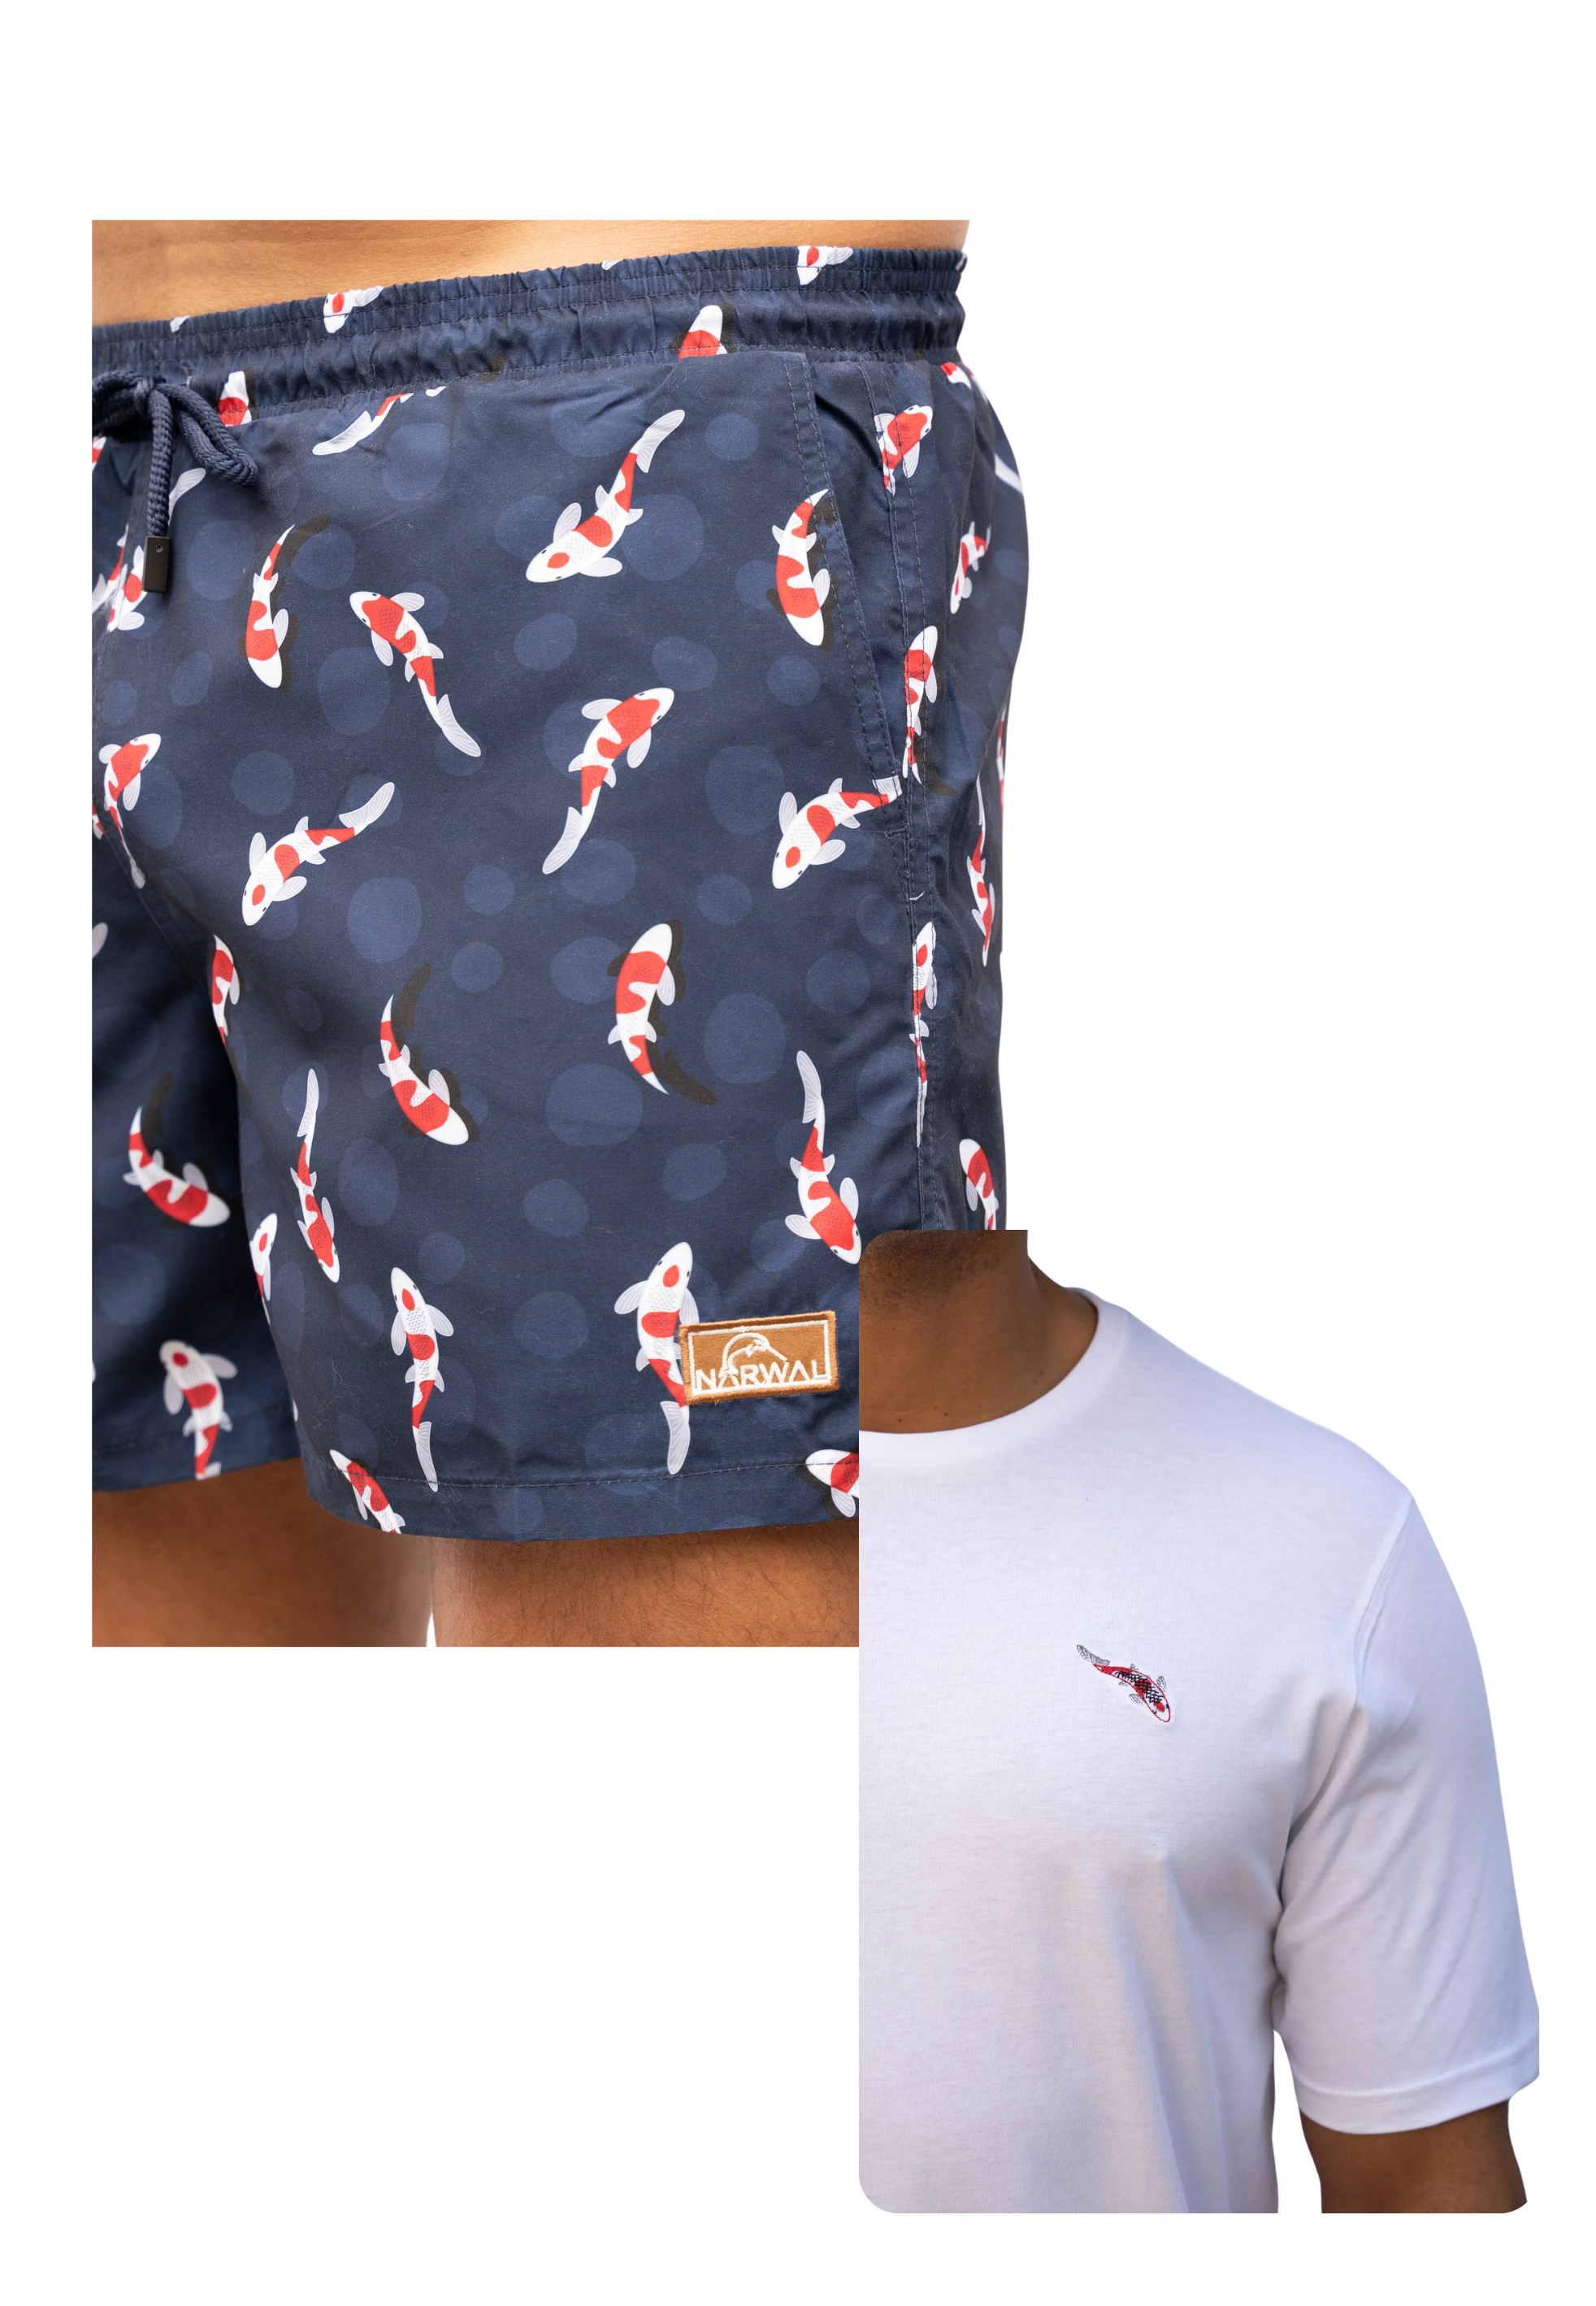 Koi Swim Trunks & T-shirt Bundle